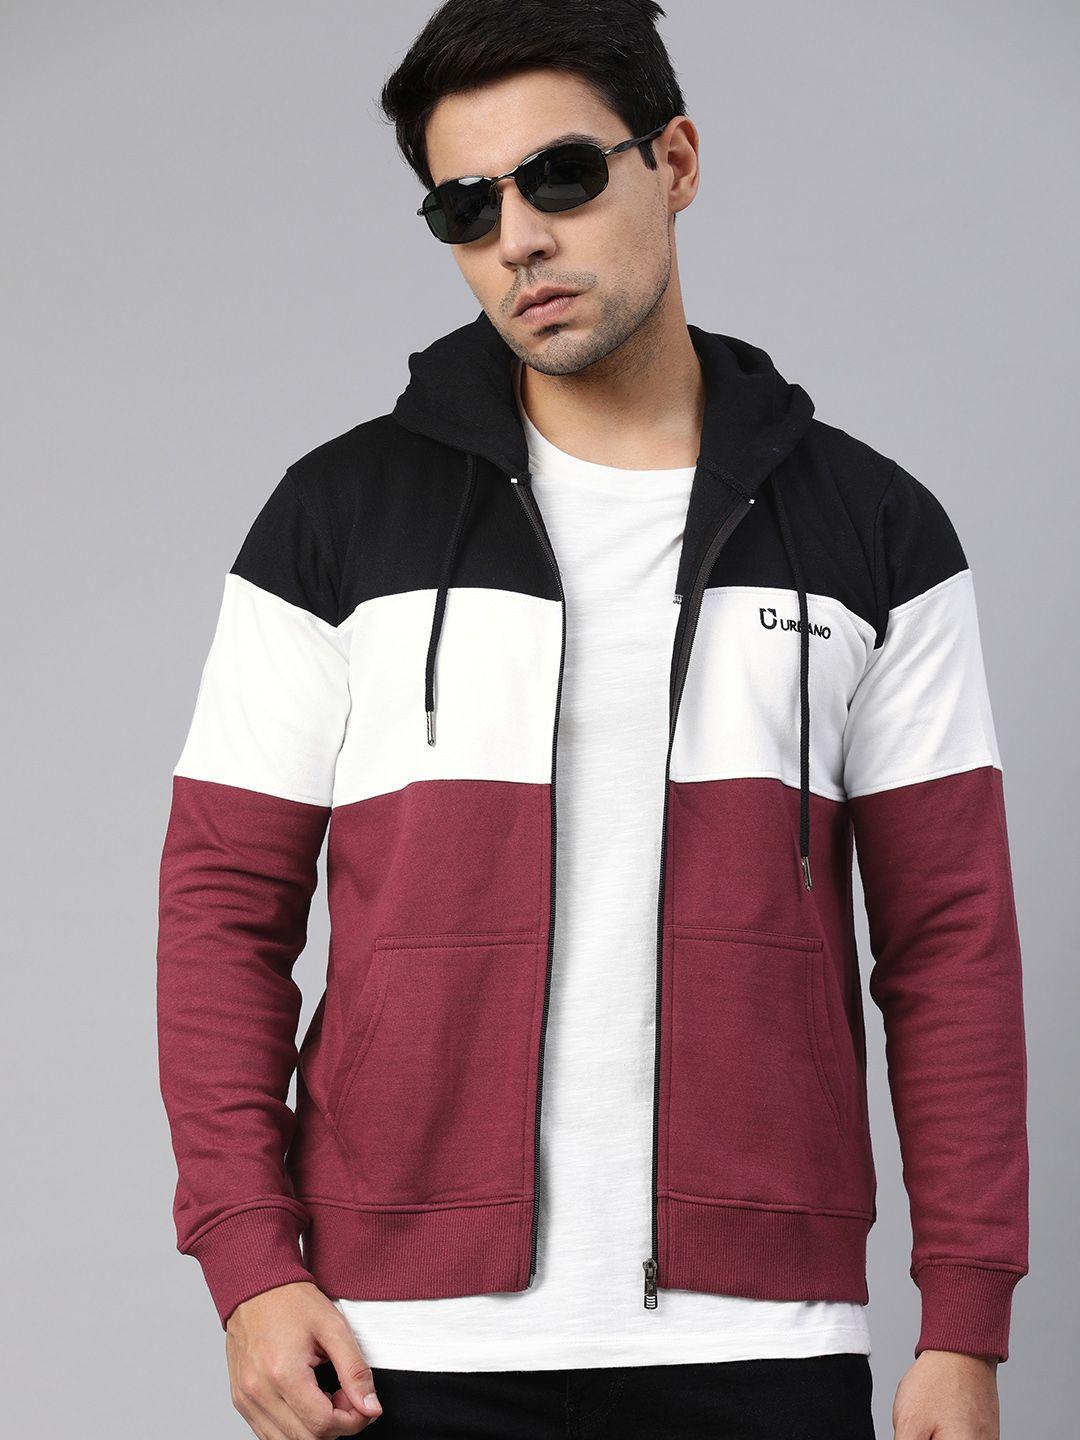 urbano fashion men black & white colourblocked open front jacket